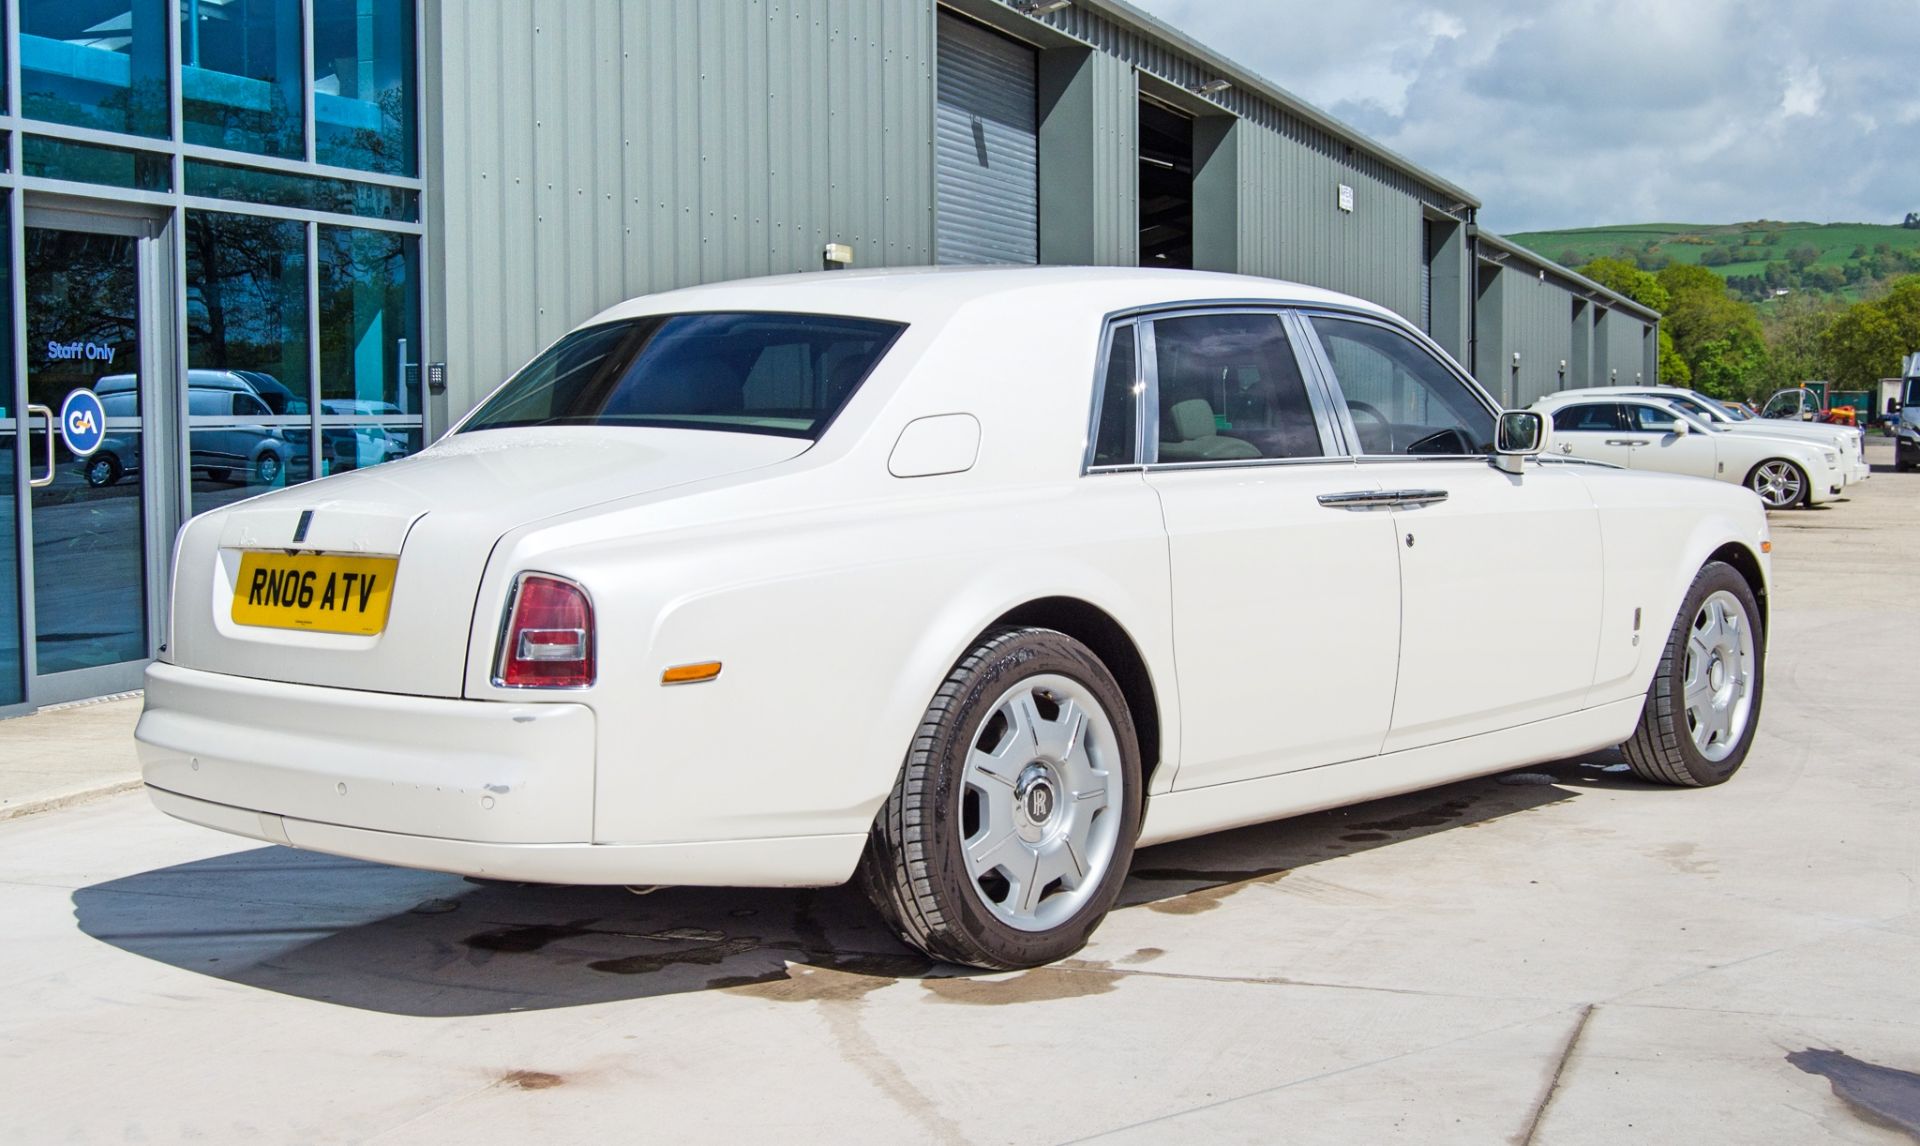 2006 Rolls Royce Phantom 6749cc V12 Auto 4 door saloon car PLUS VAT - Image 5 of 52